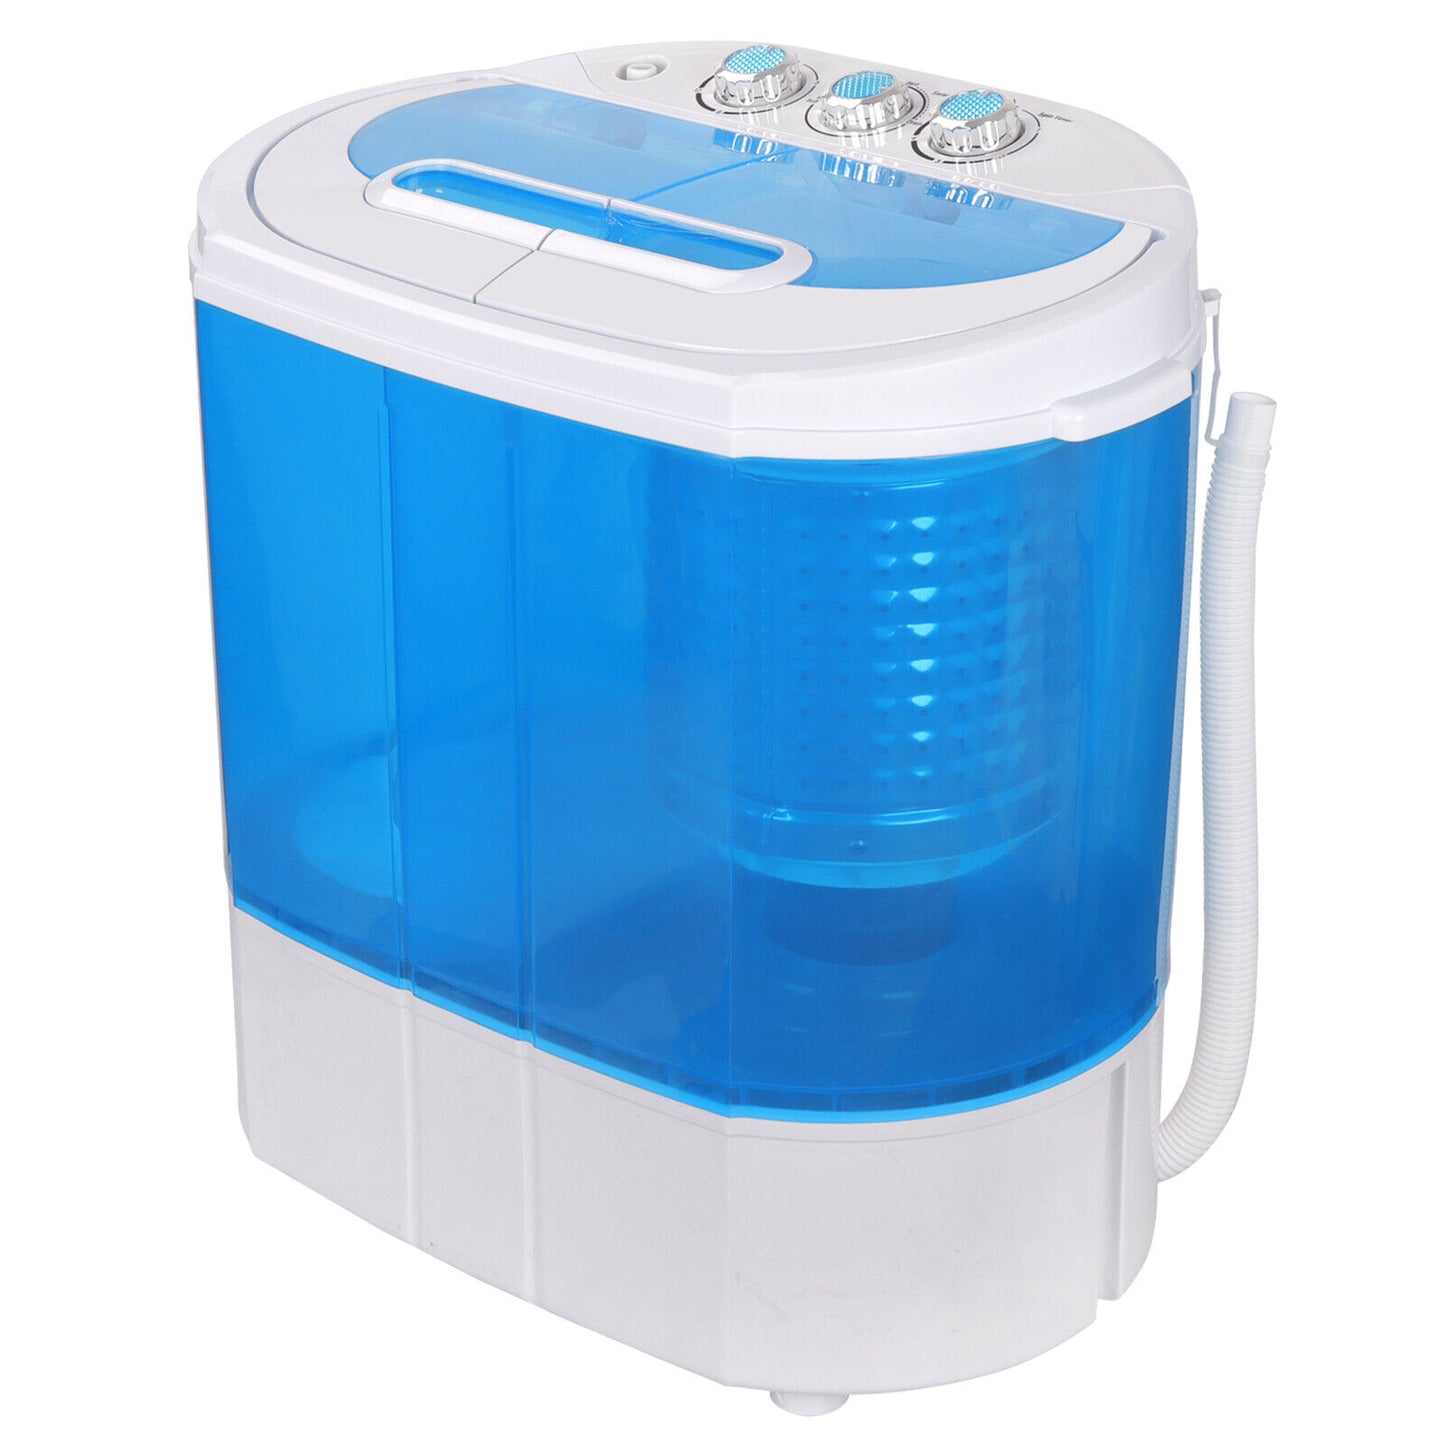 Compact Portable Twin Tub Washing Machine Top load 10lbs Washer Gravity Drain